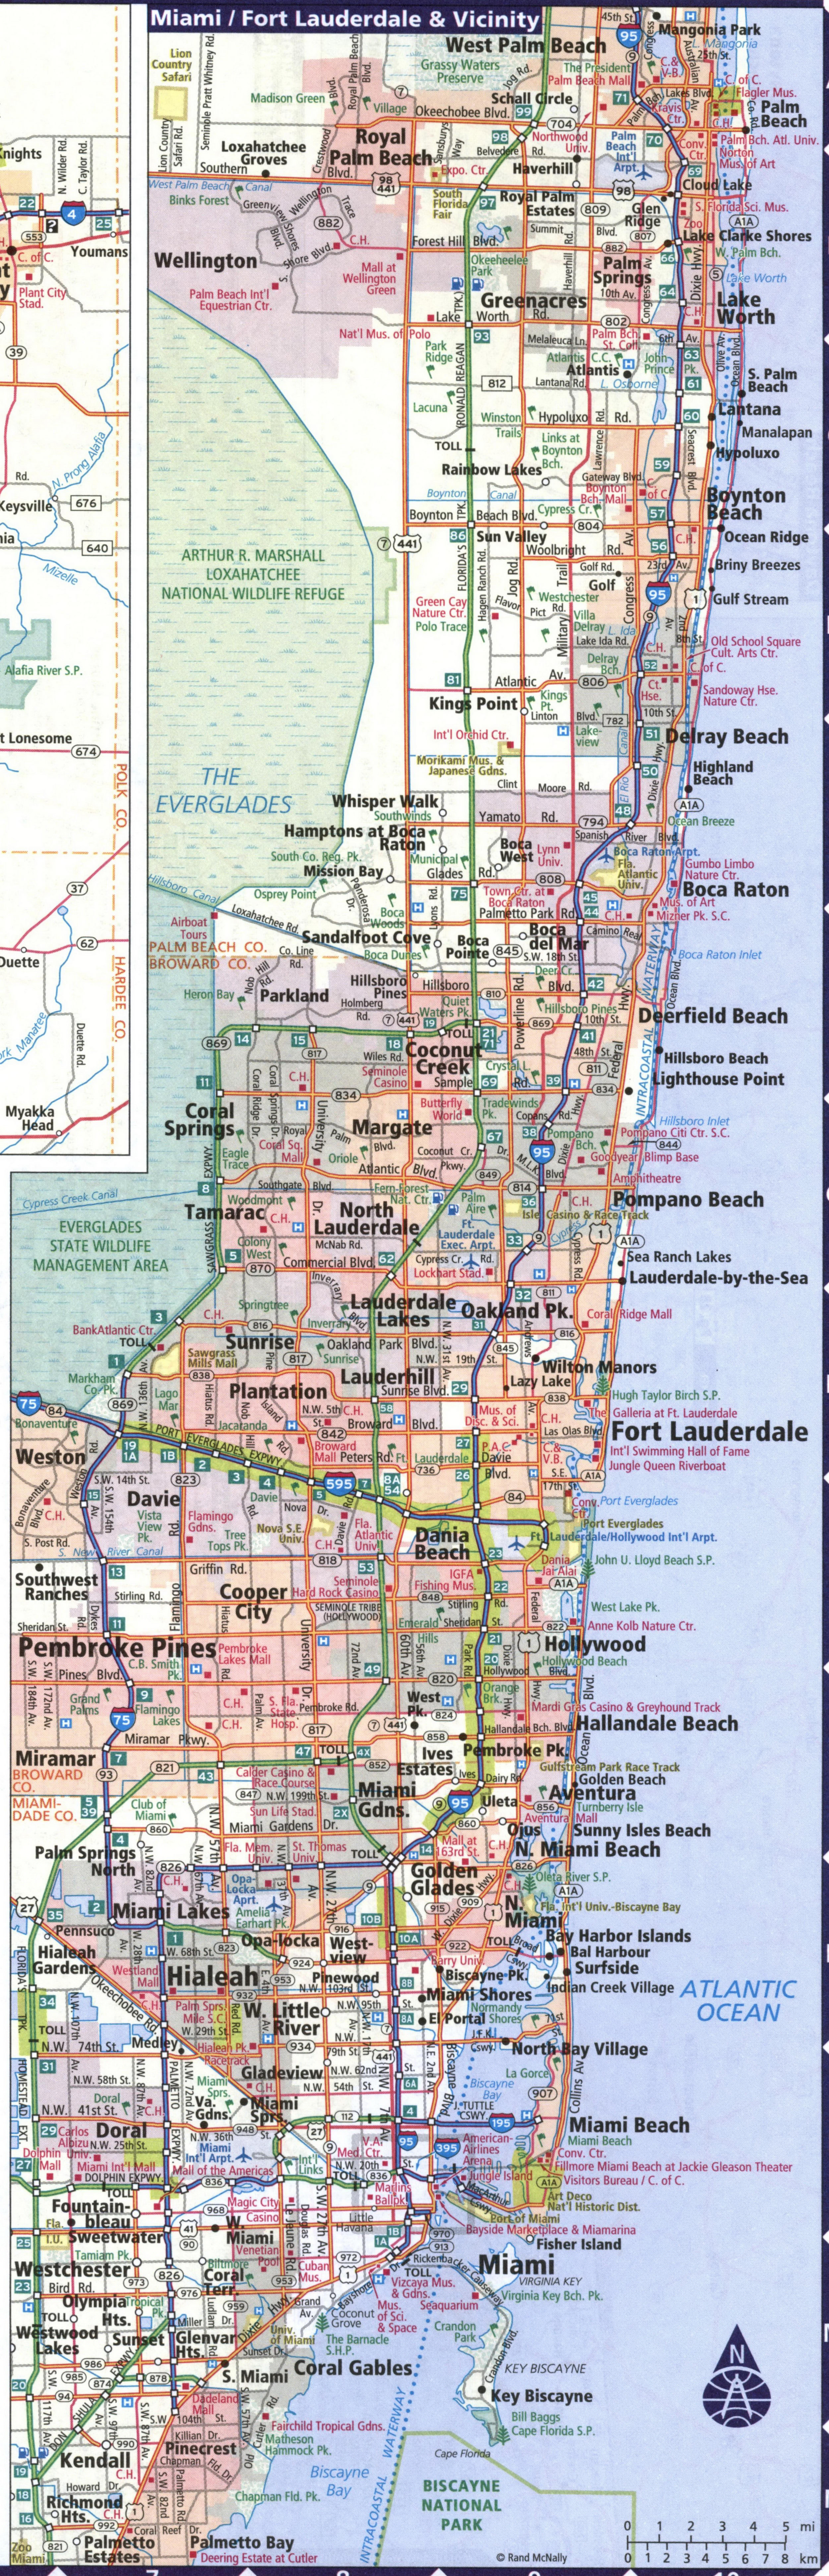 Map of Miami area